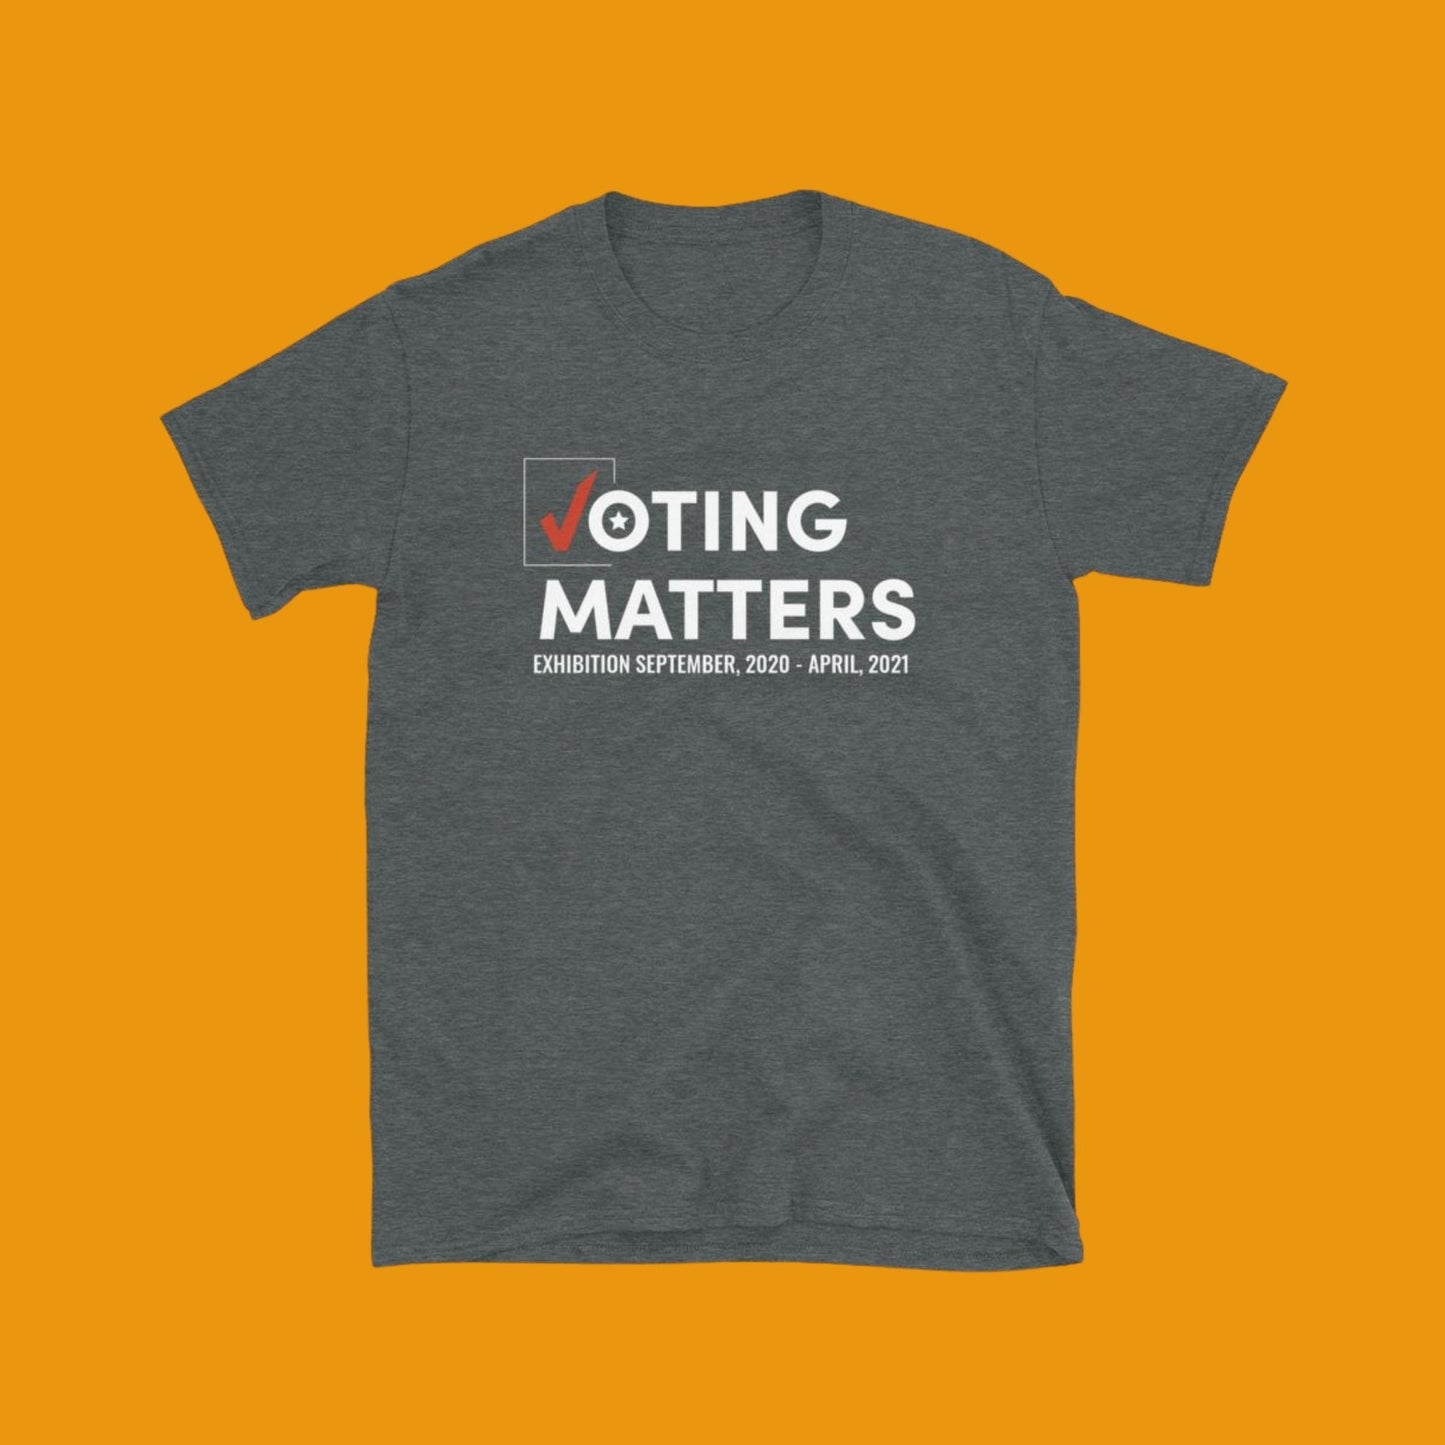 Voting Matters Logo Short-Sleeve Unisex T-Shirt